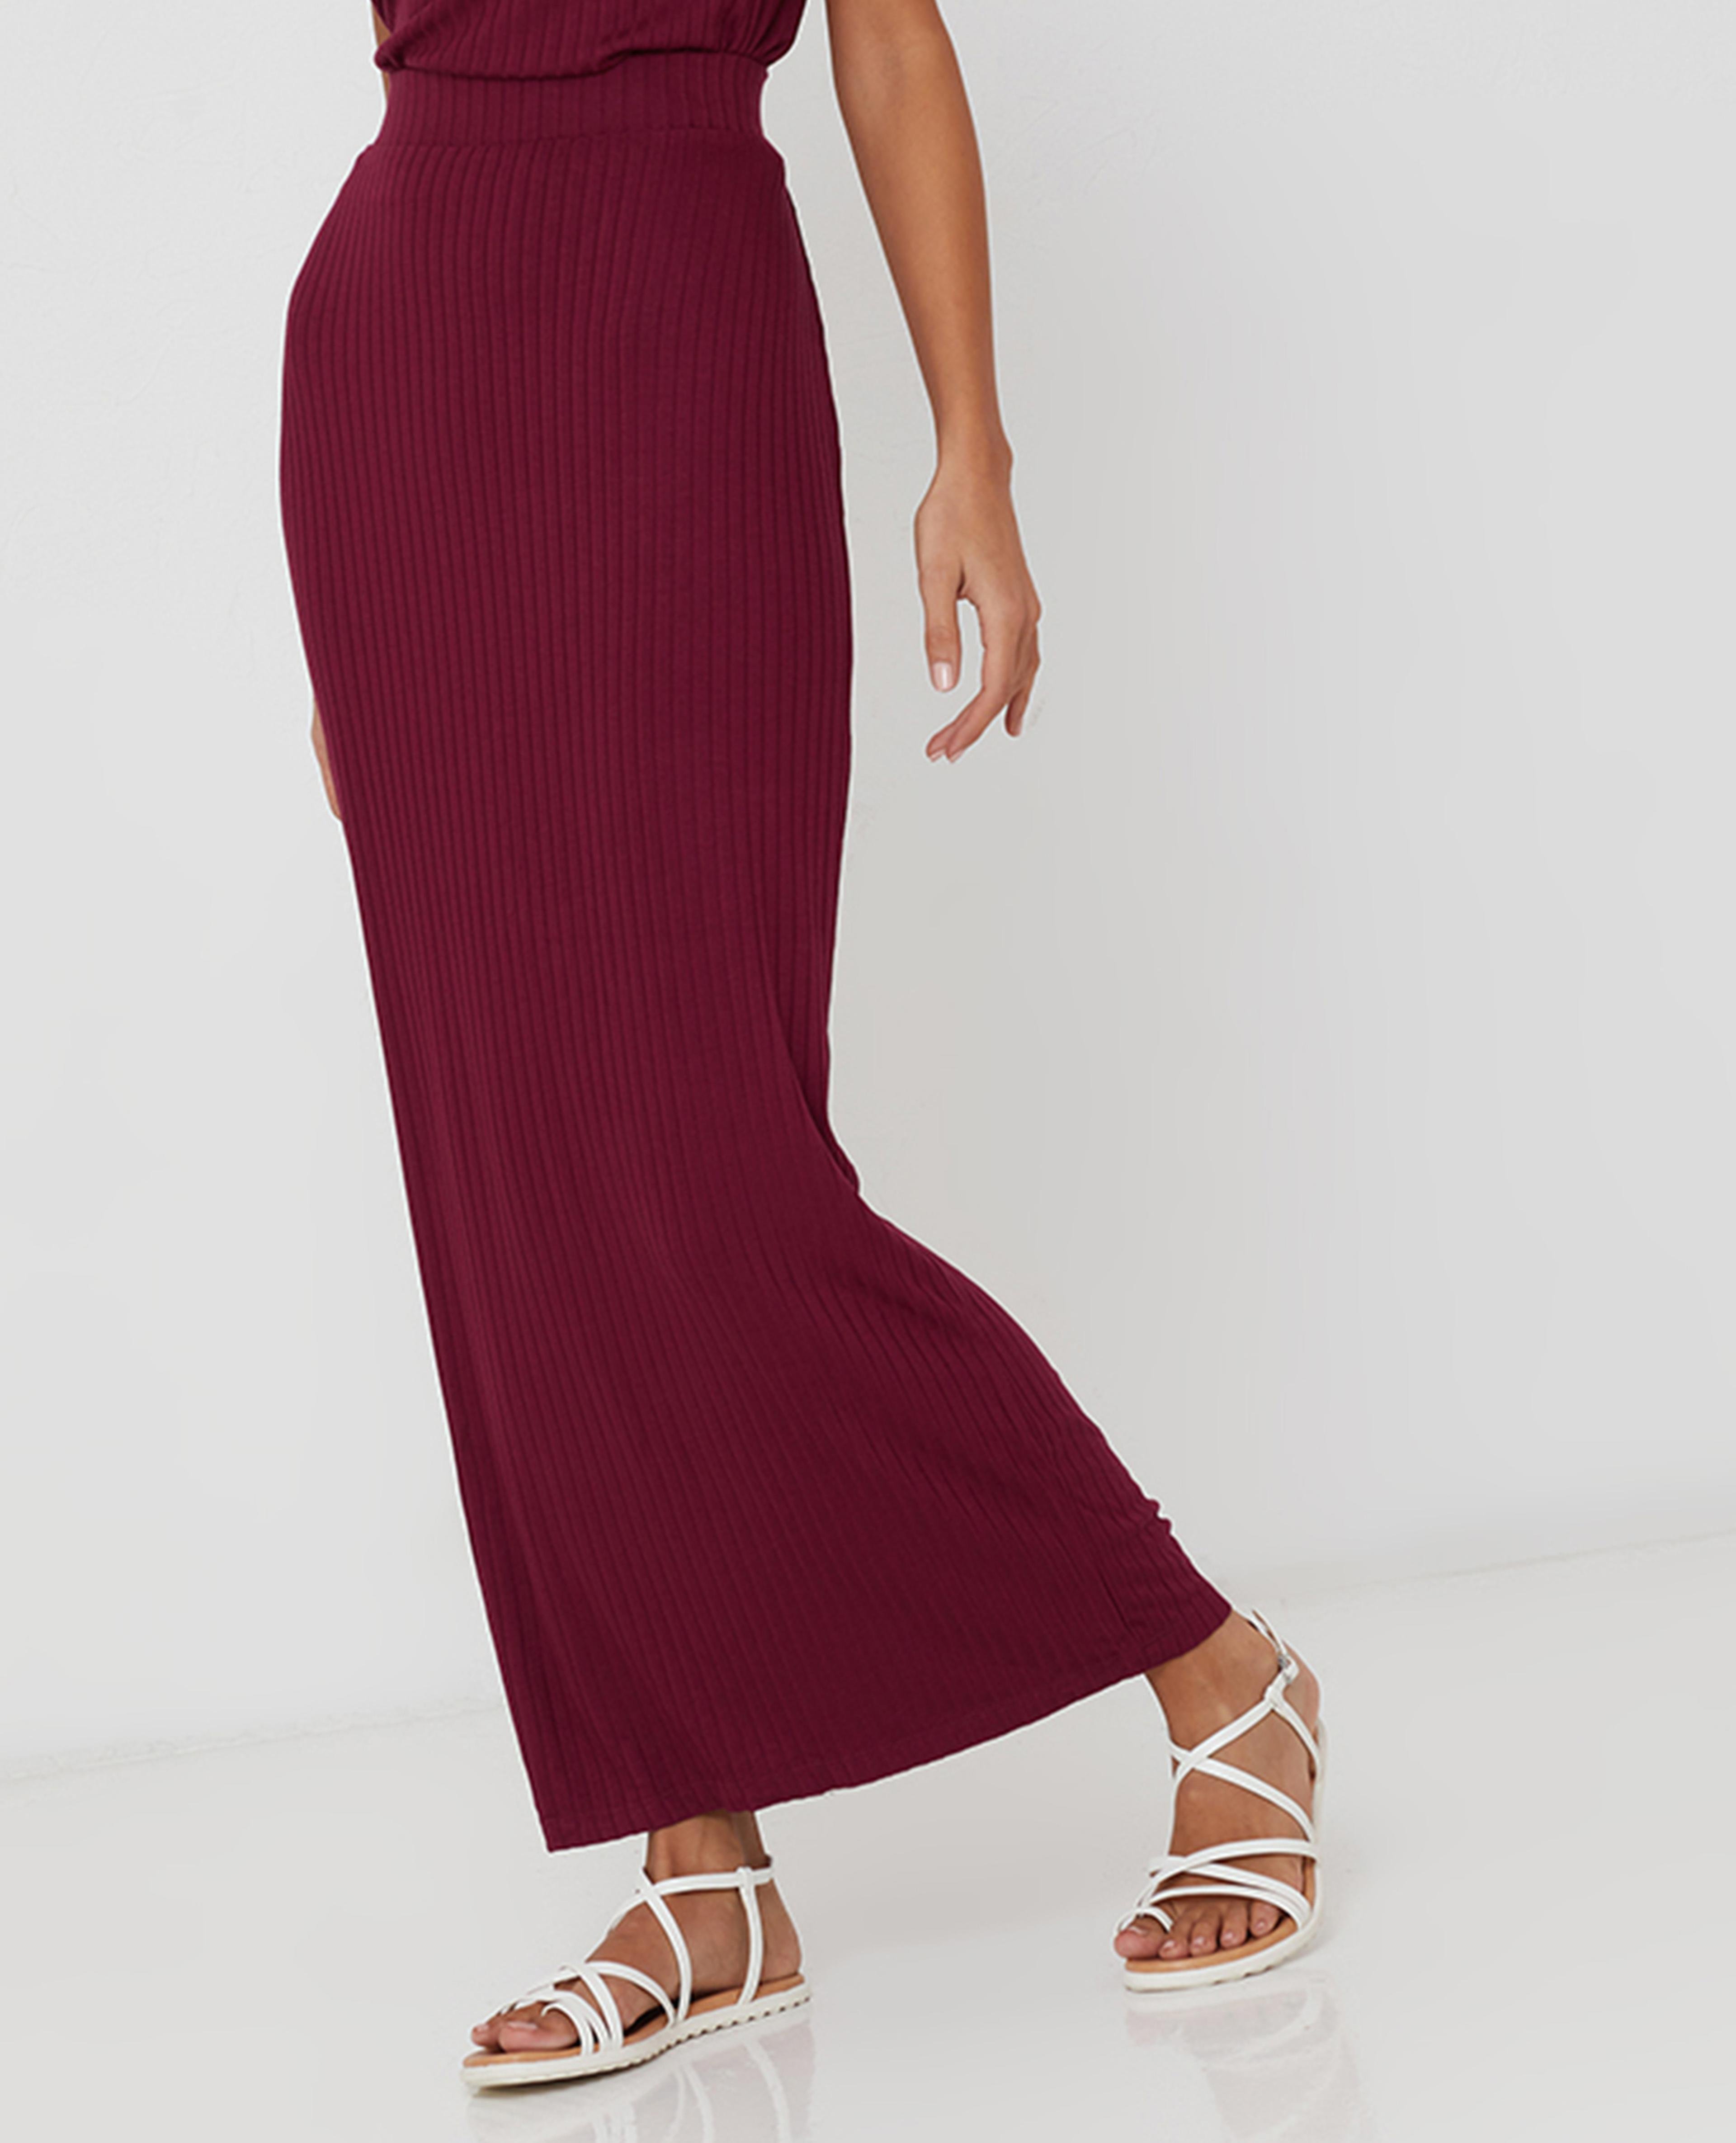 Burgundy Solid Skirt